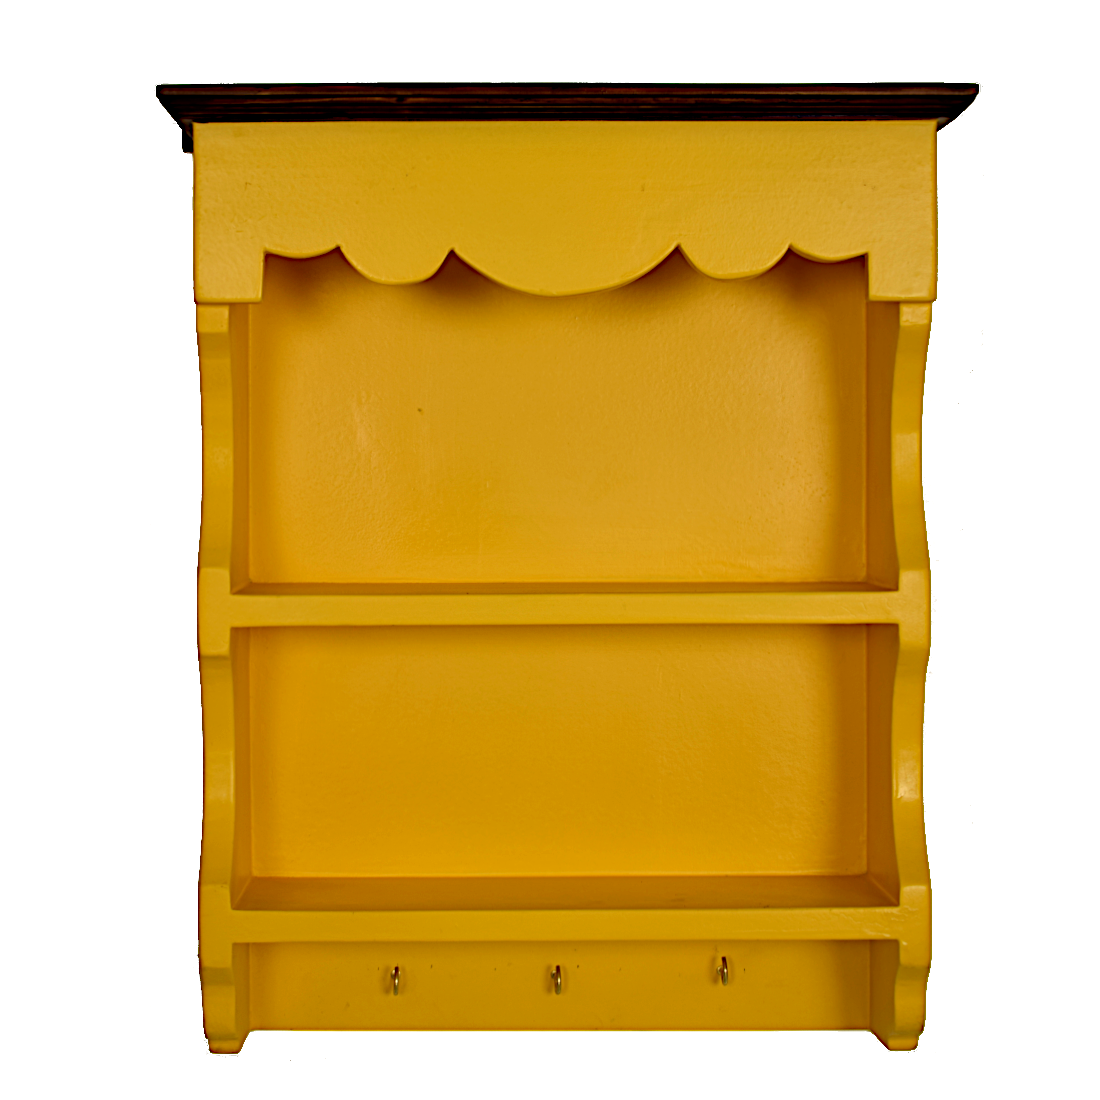 CustHum-Nutmeg-Spice-Shelf-yellow01